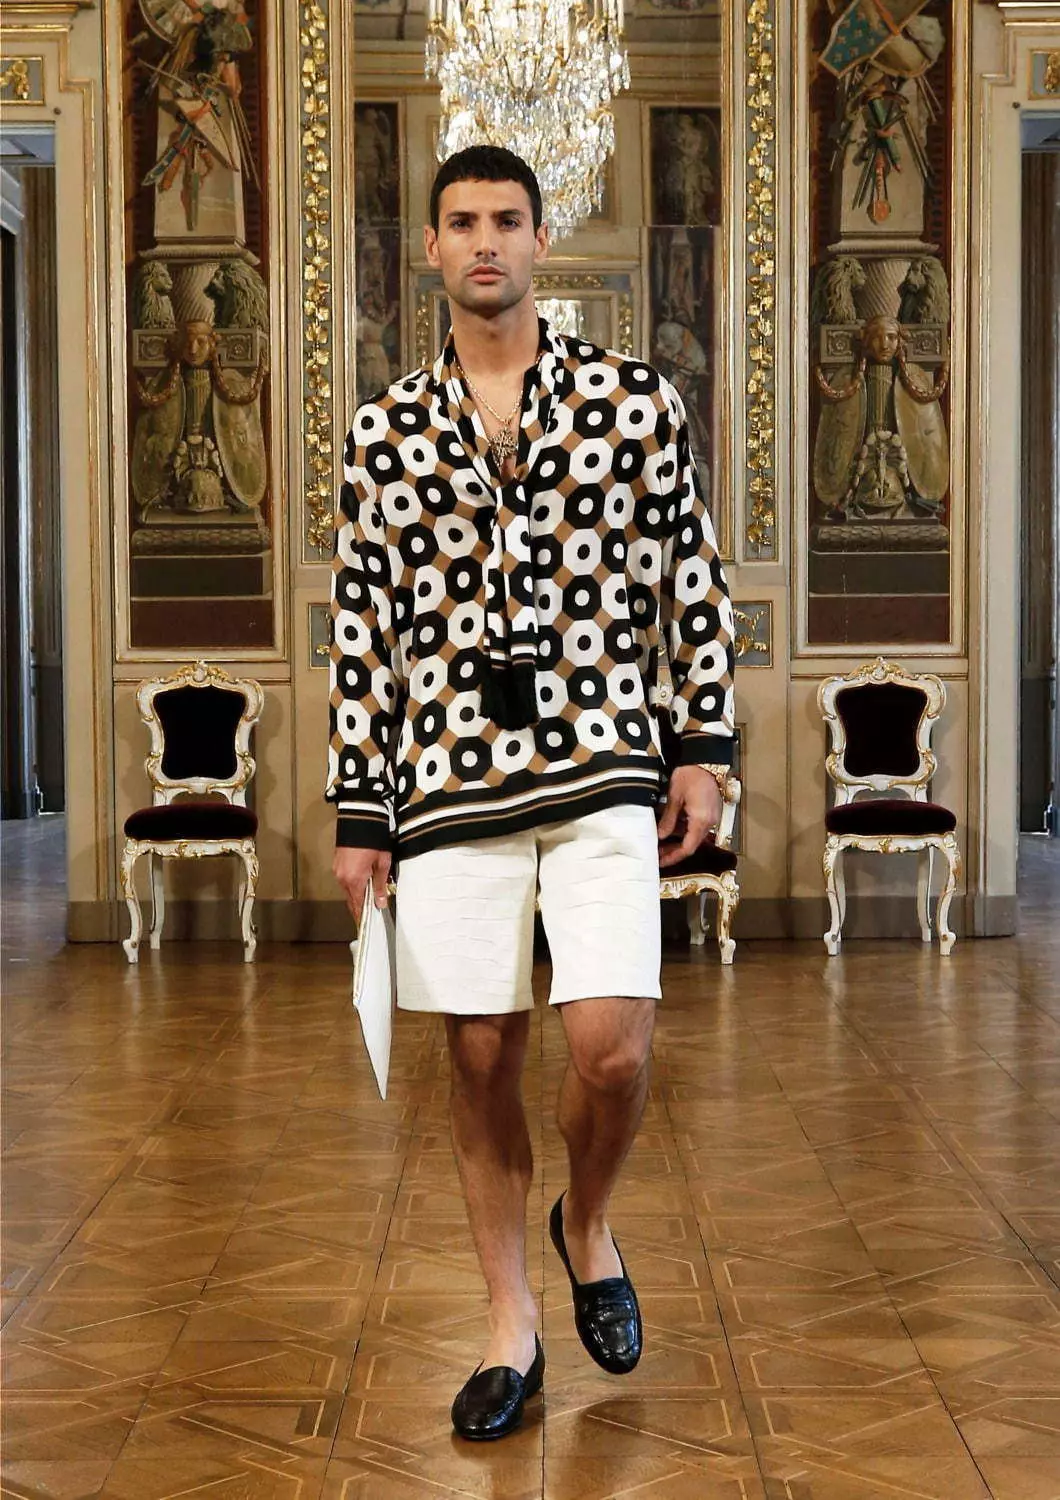 Iqoqo le-Dolce & Gabbana Alta Sartoria Menswear July 2020 53602_46